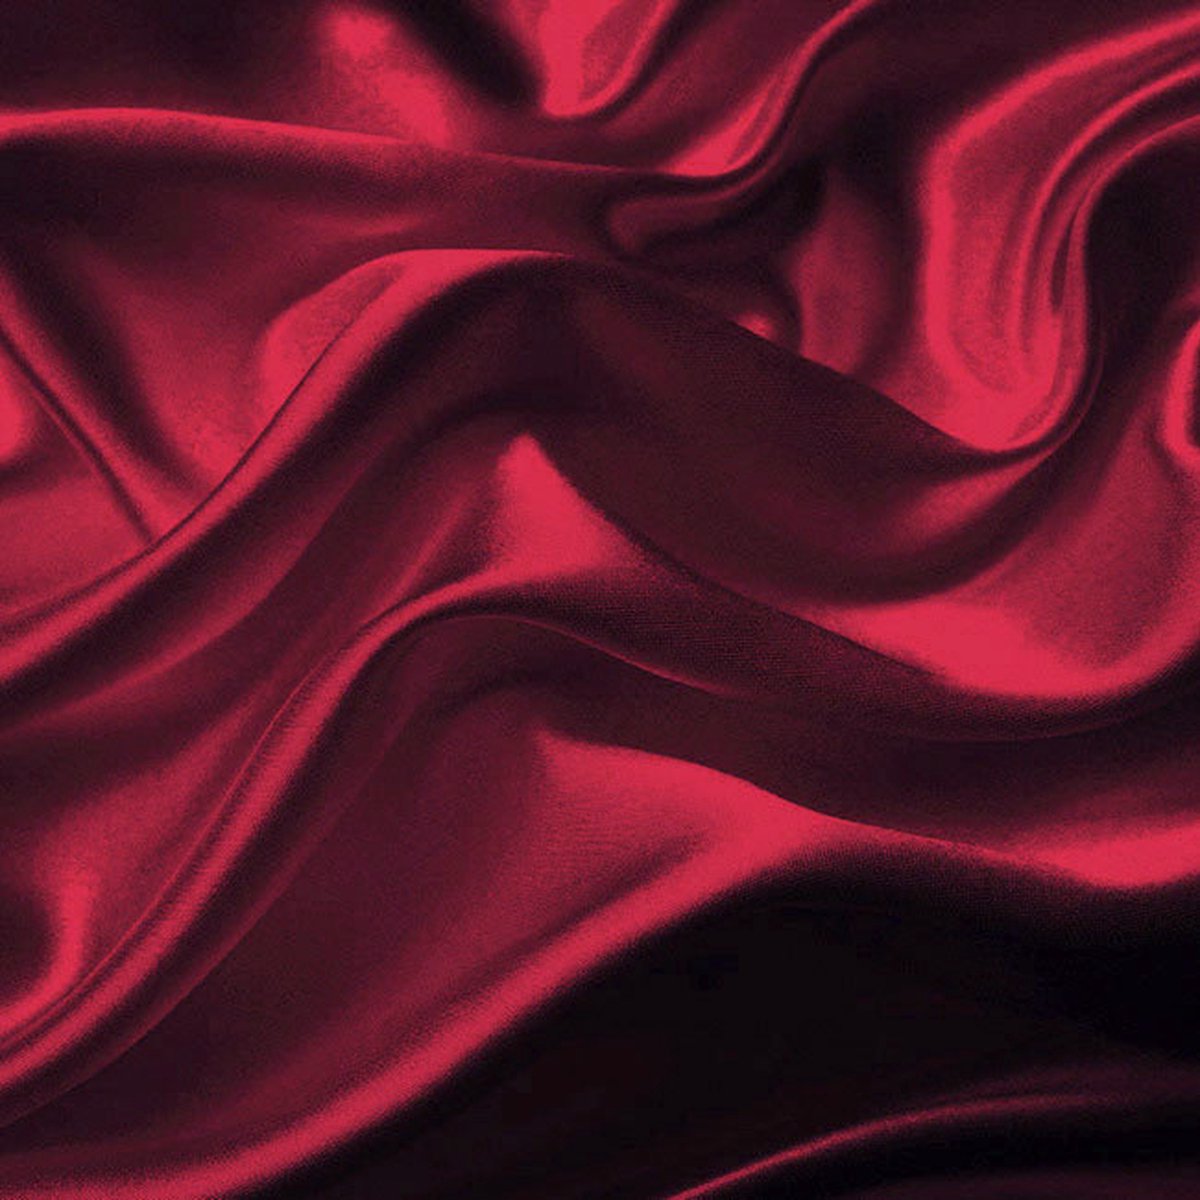 Beauty Silk Hoeslaken Satijn Bordeaux Rood 160x200 cm - Glans Satijn